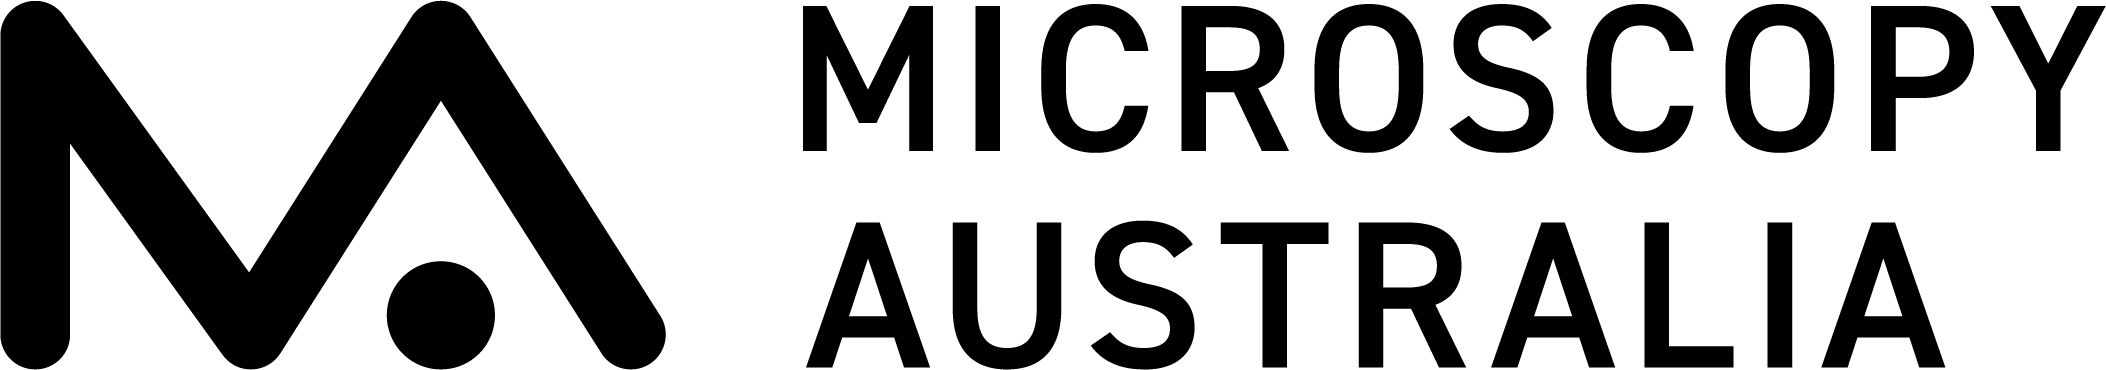 Microscopy Australia logo